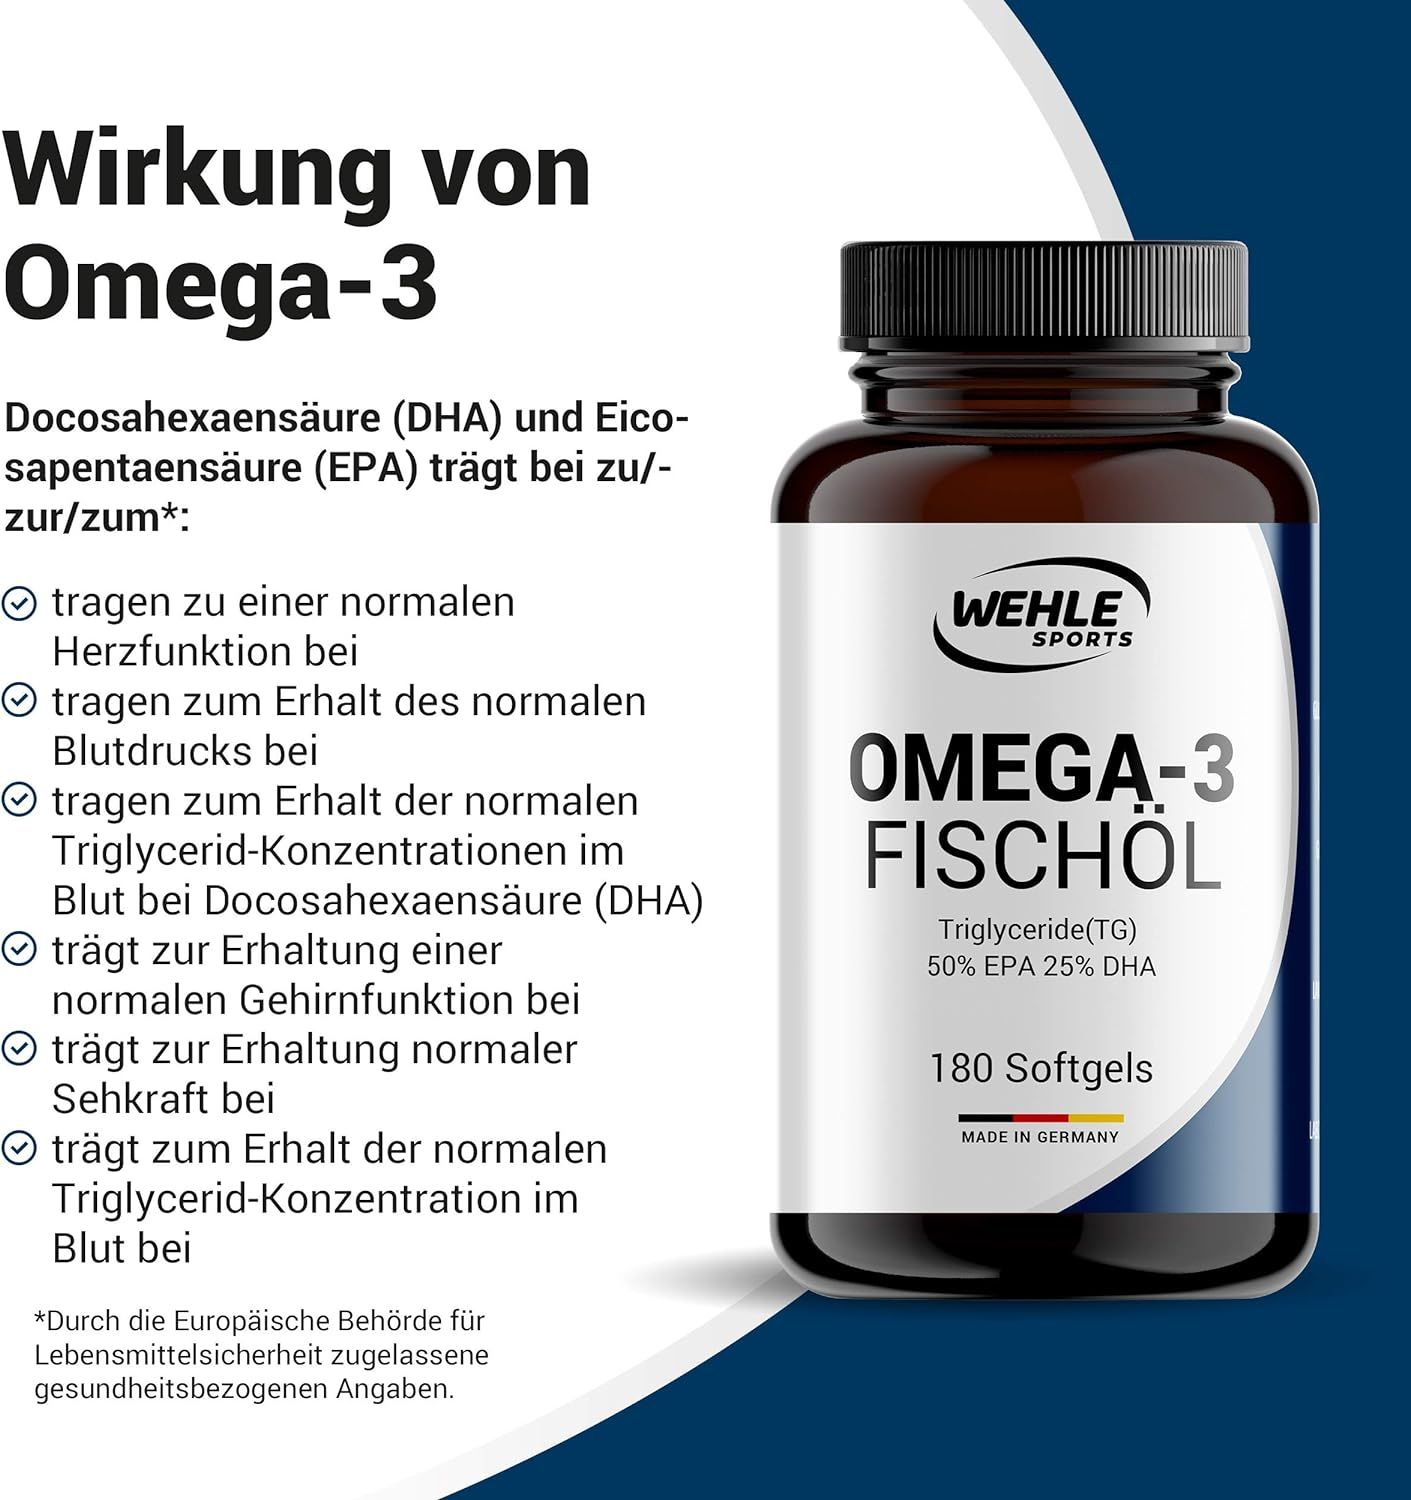 Omega 3 Kapseln hochdosiert - Fischöl Kapseln mit 2000mg (1000mg EPA & 500mg DHA) pro Tagesdosis